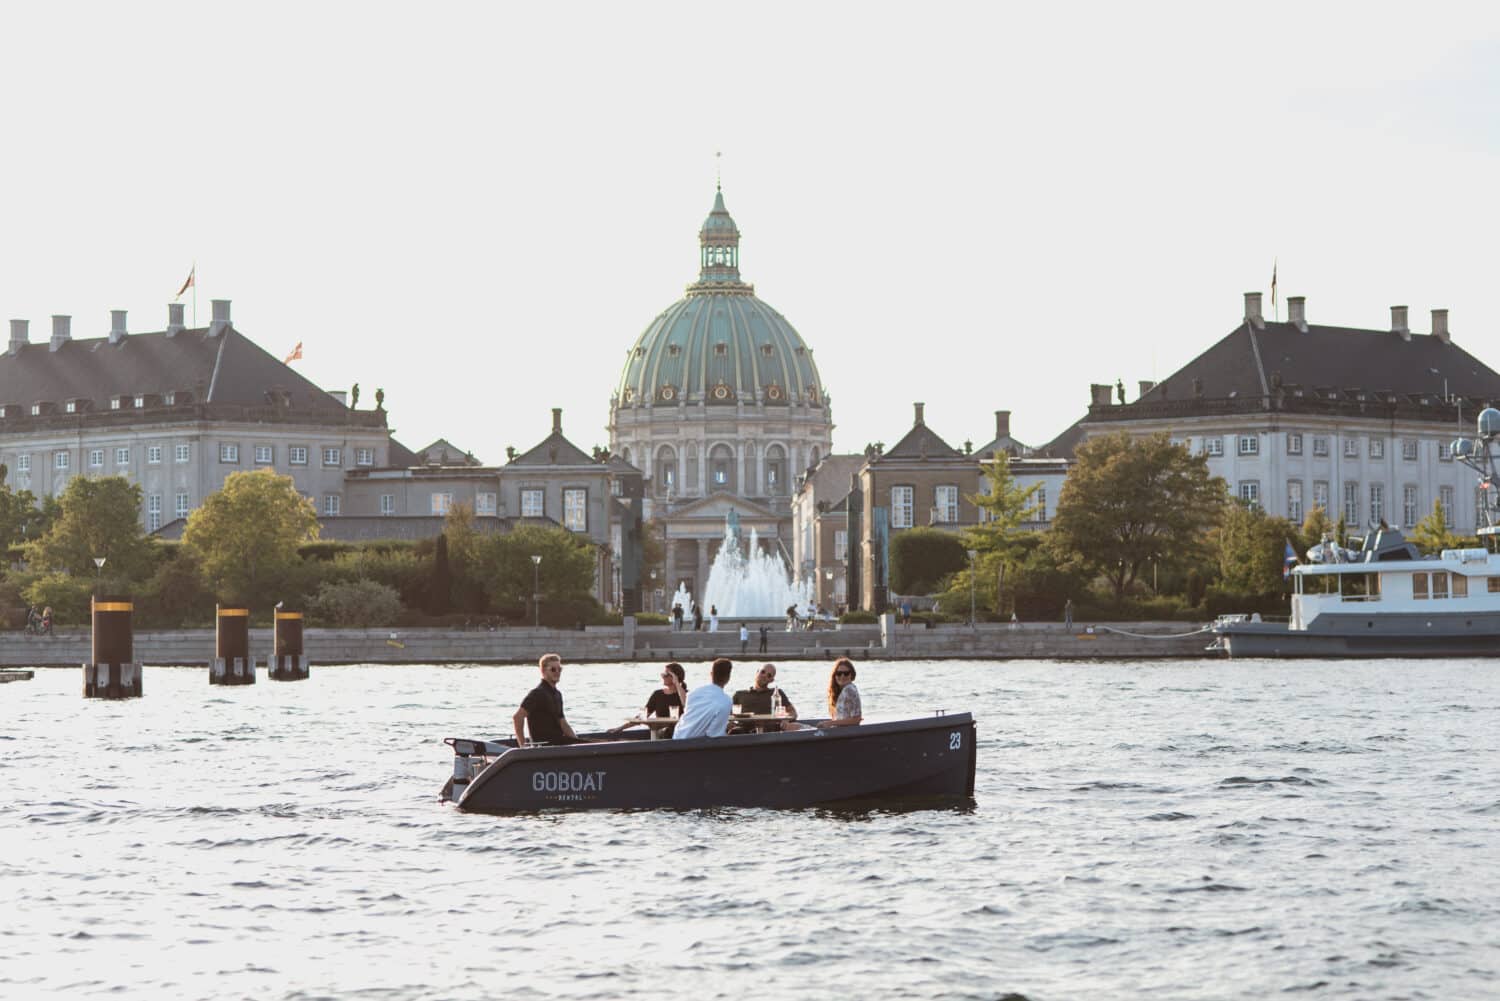 Goboat Explorer på havnen foran Amalienborg